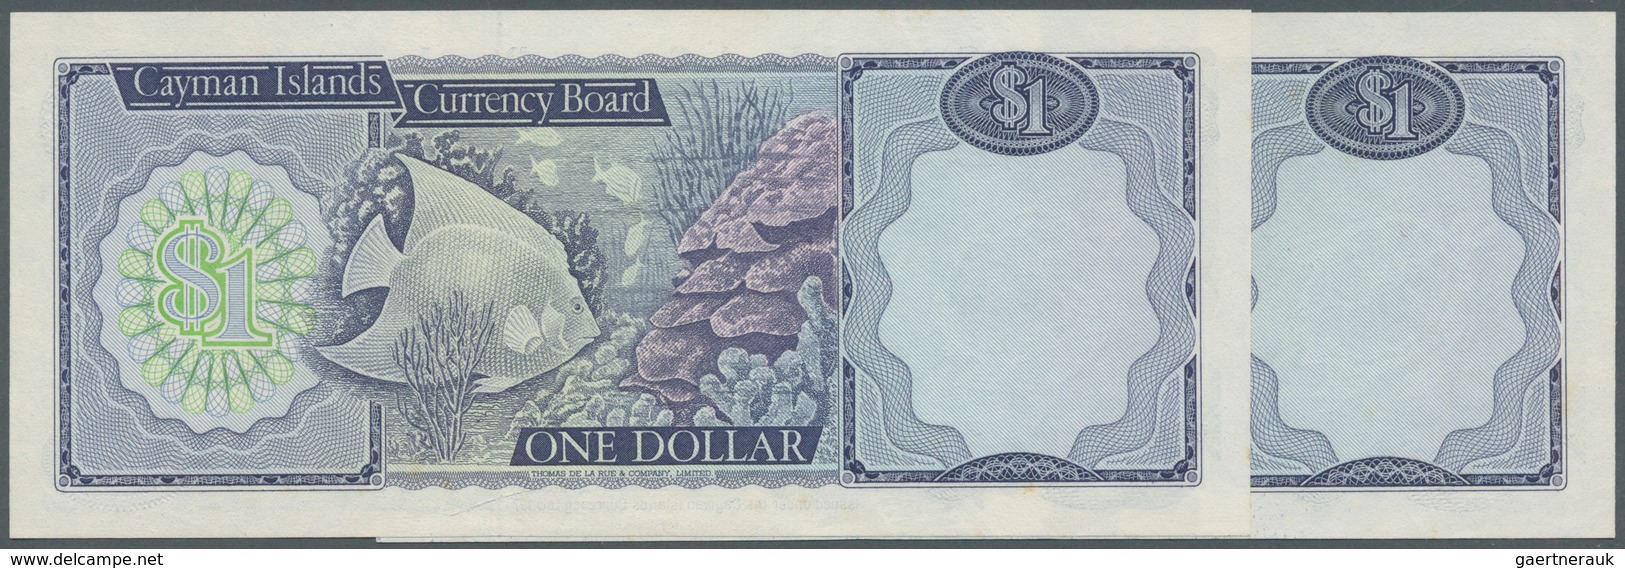 01261 Cayman Islands: Set 2 Pcs CONSECUTIVE 1 Dollar L.1974 P. 5f In Condition: UNC. (2 Pcs) - Iles Cayman